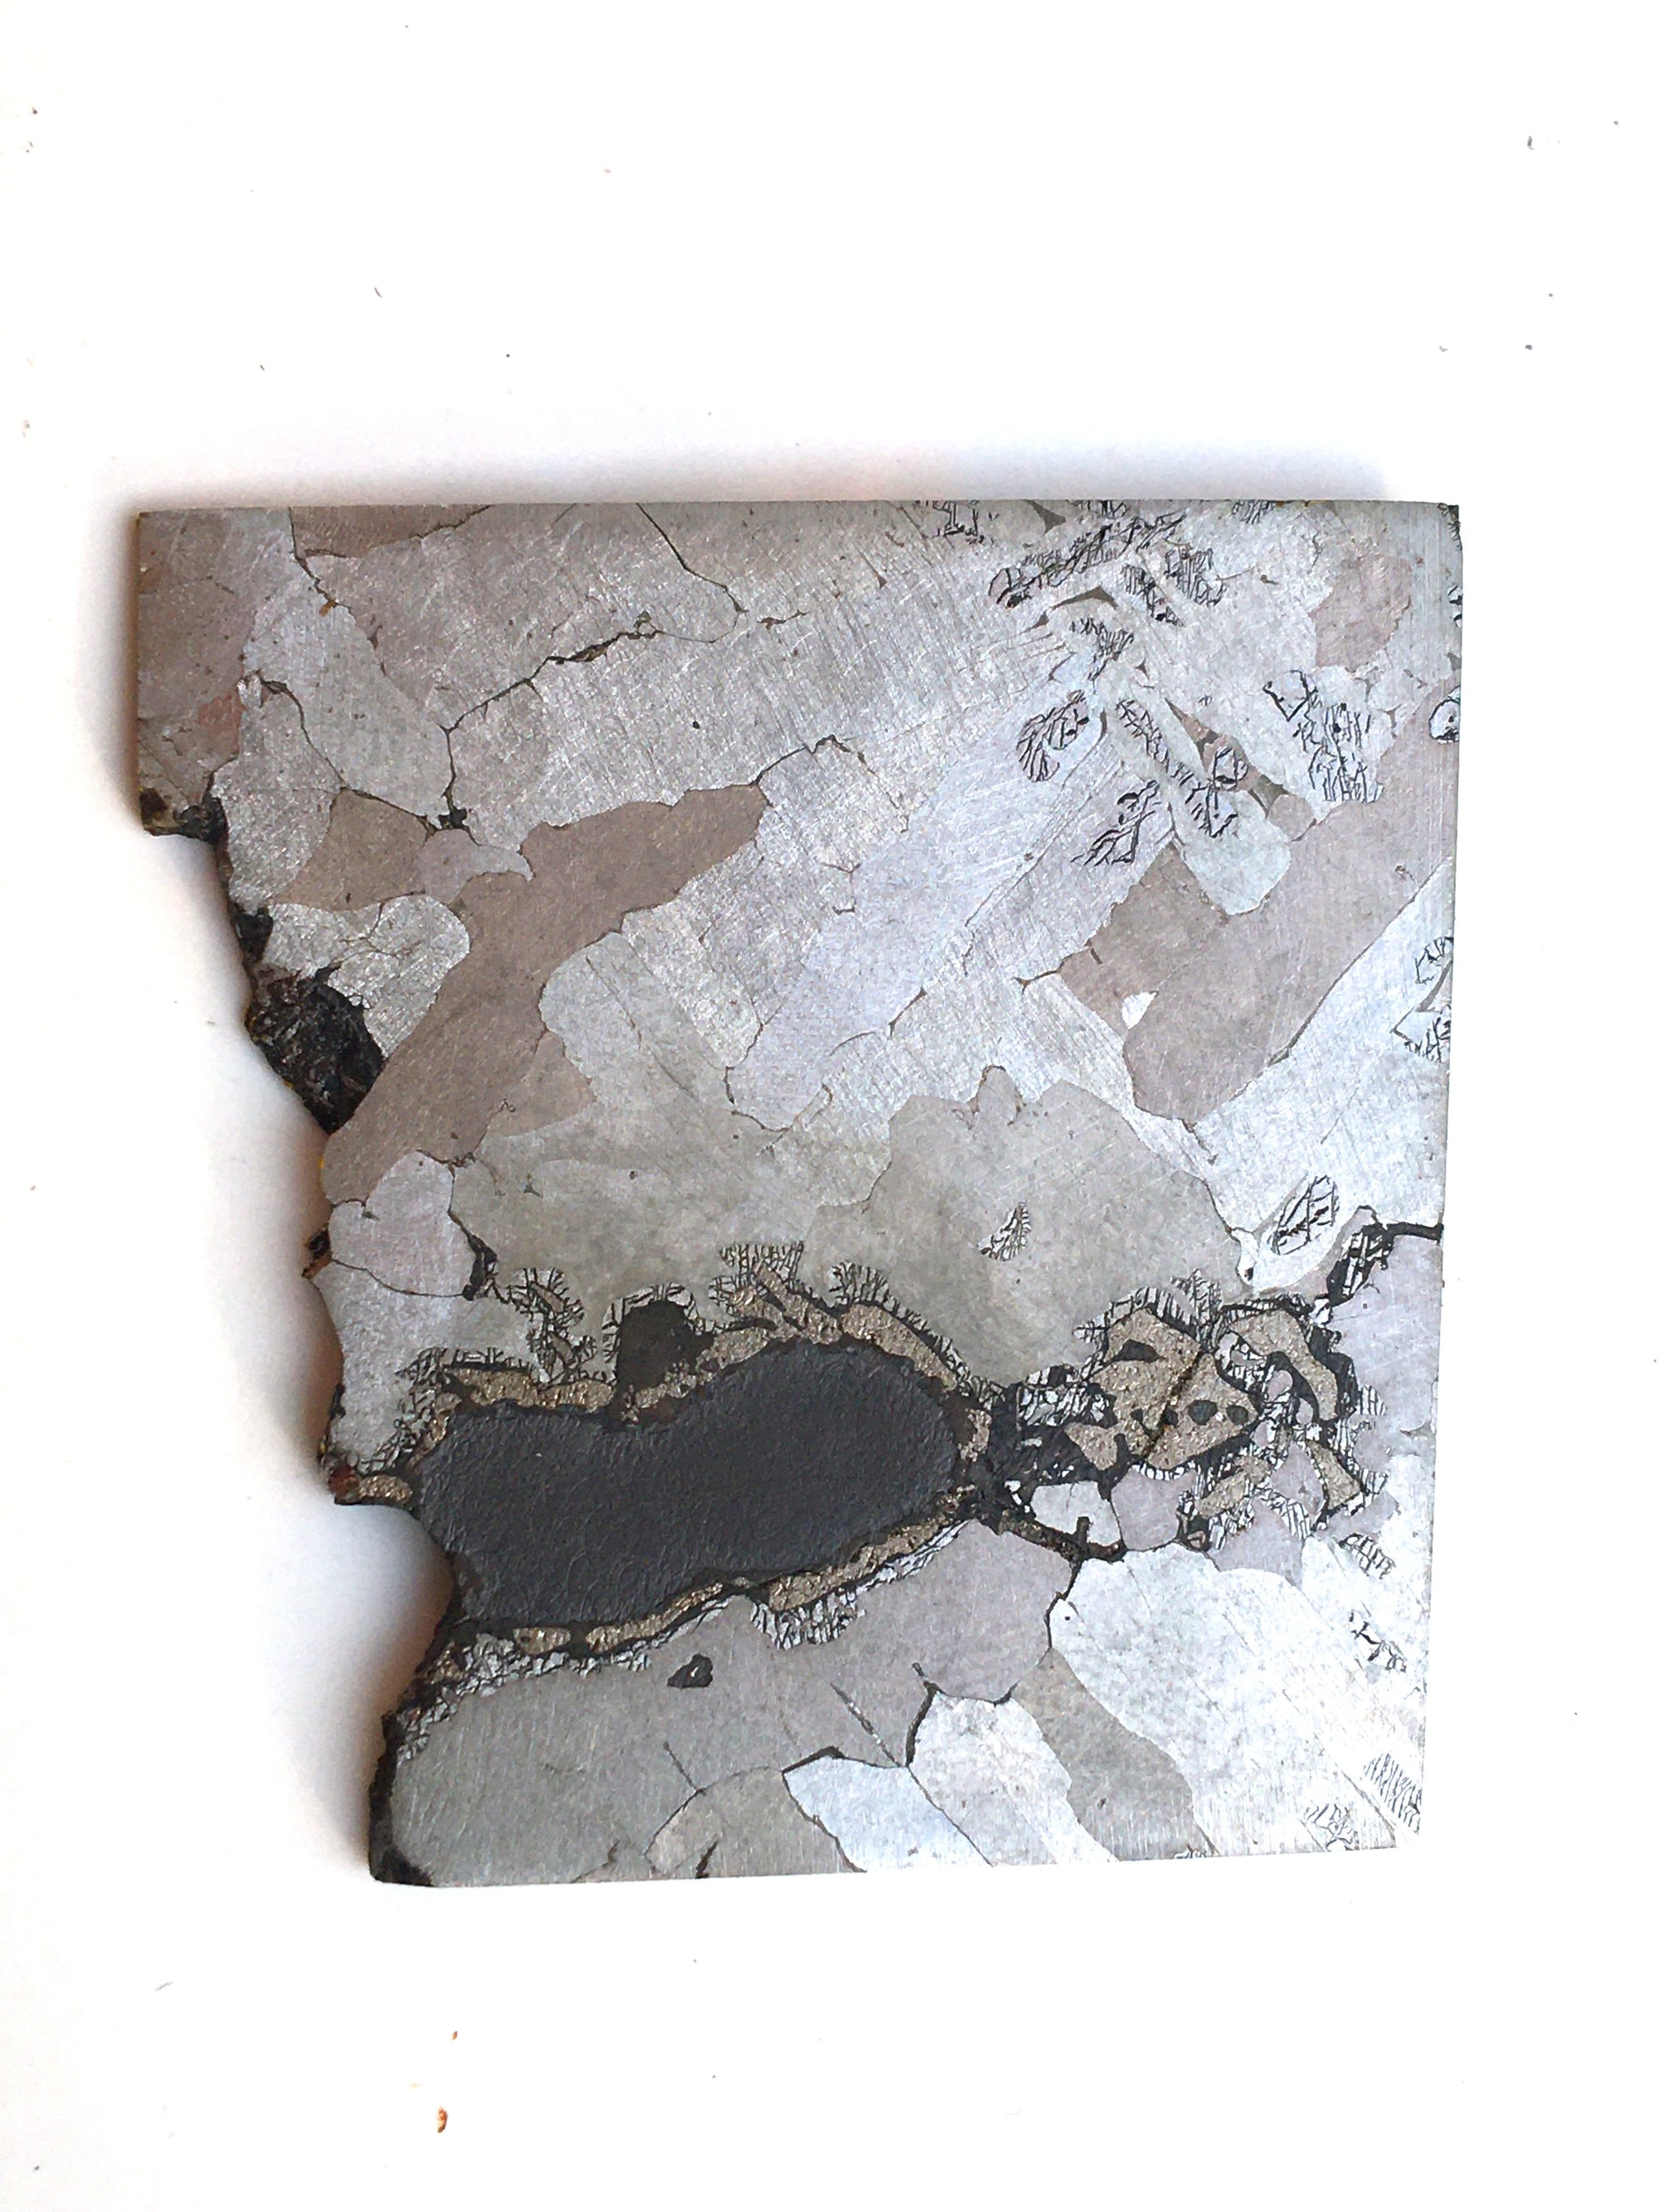 acid etched slice of nantan - an acid etched meteorite. widmanstatten pattern very visible